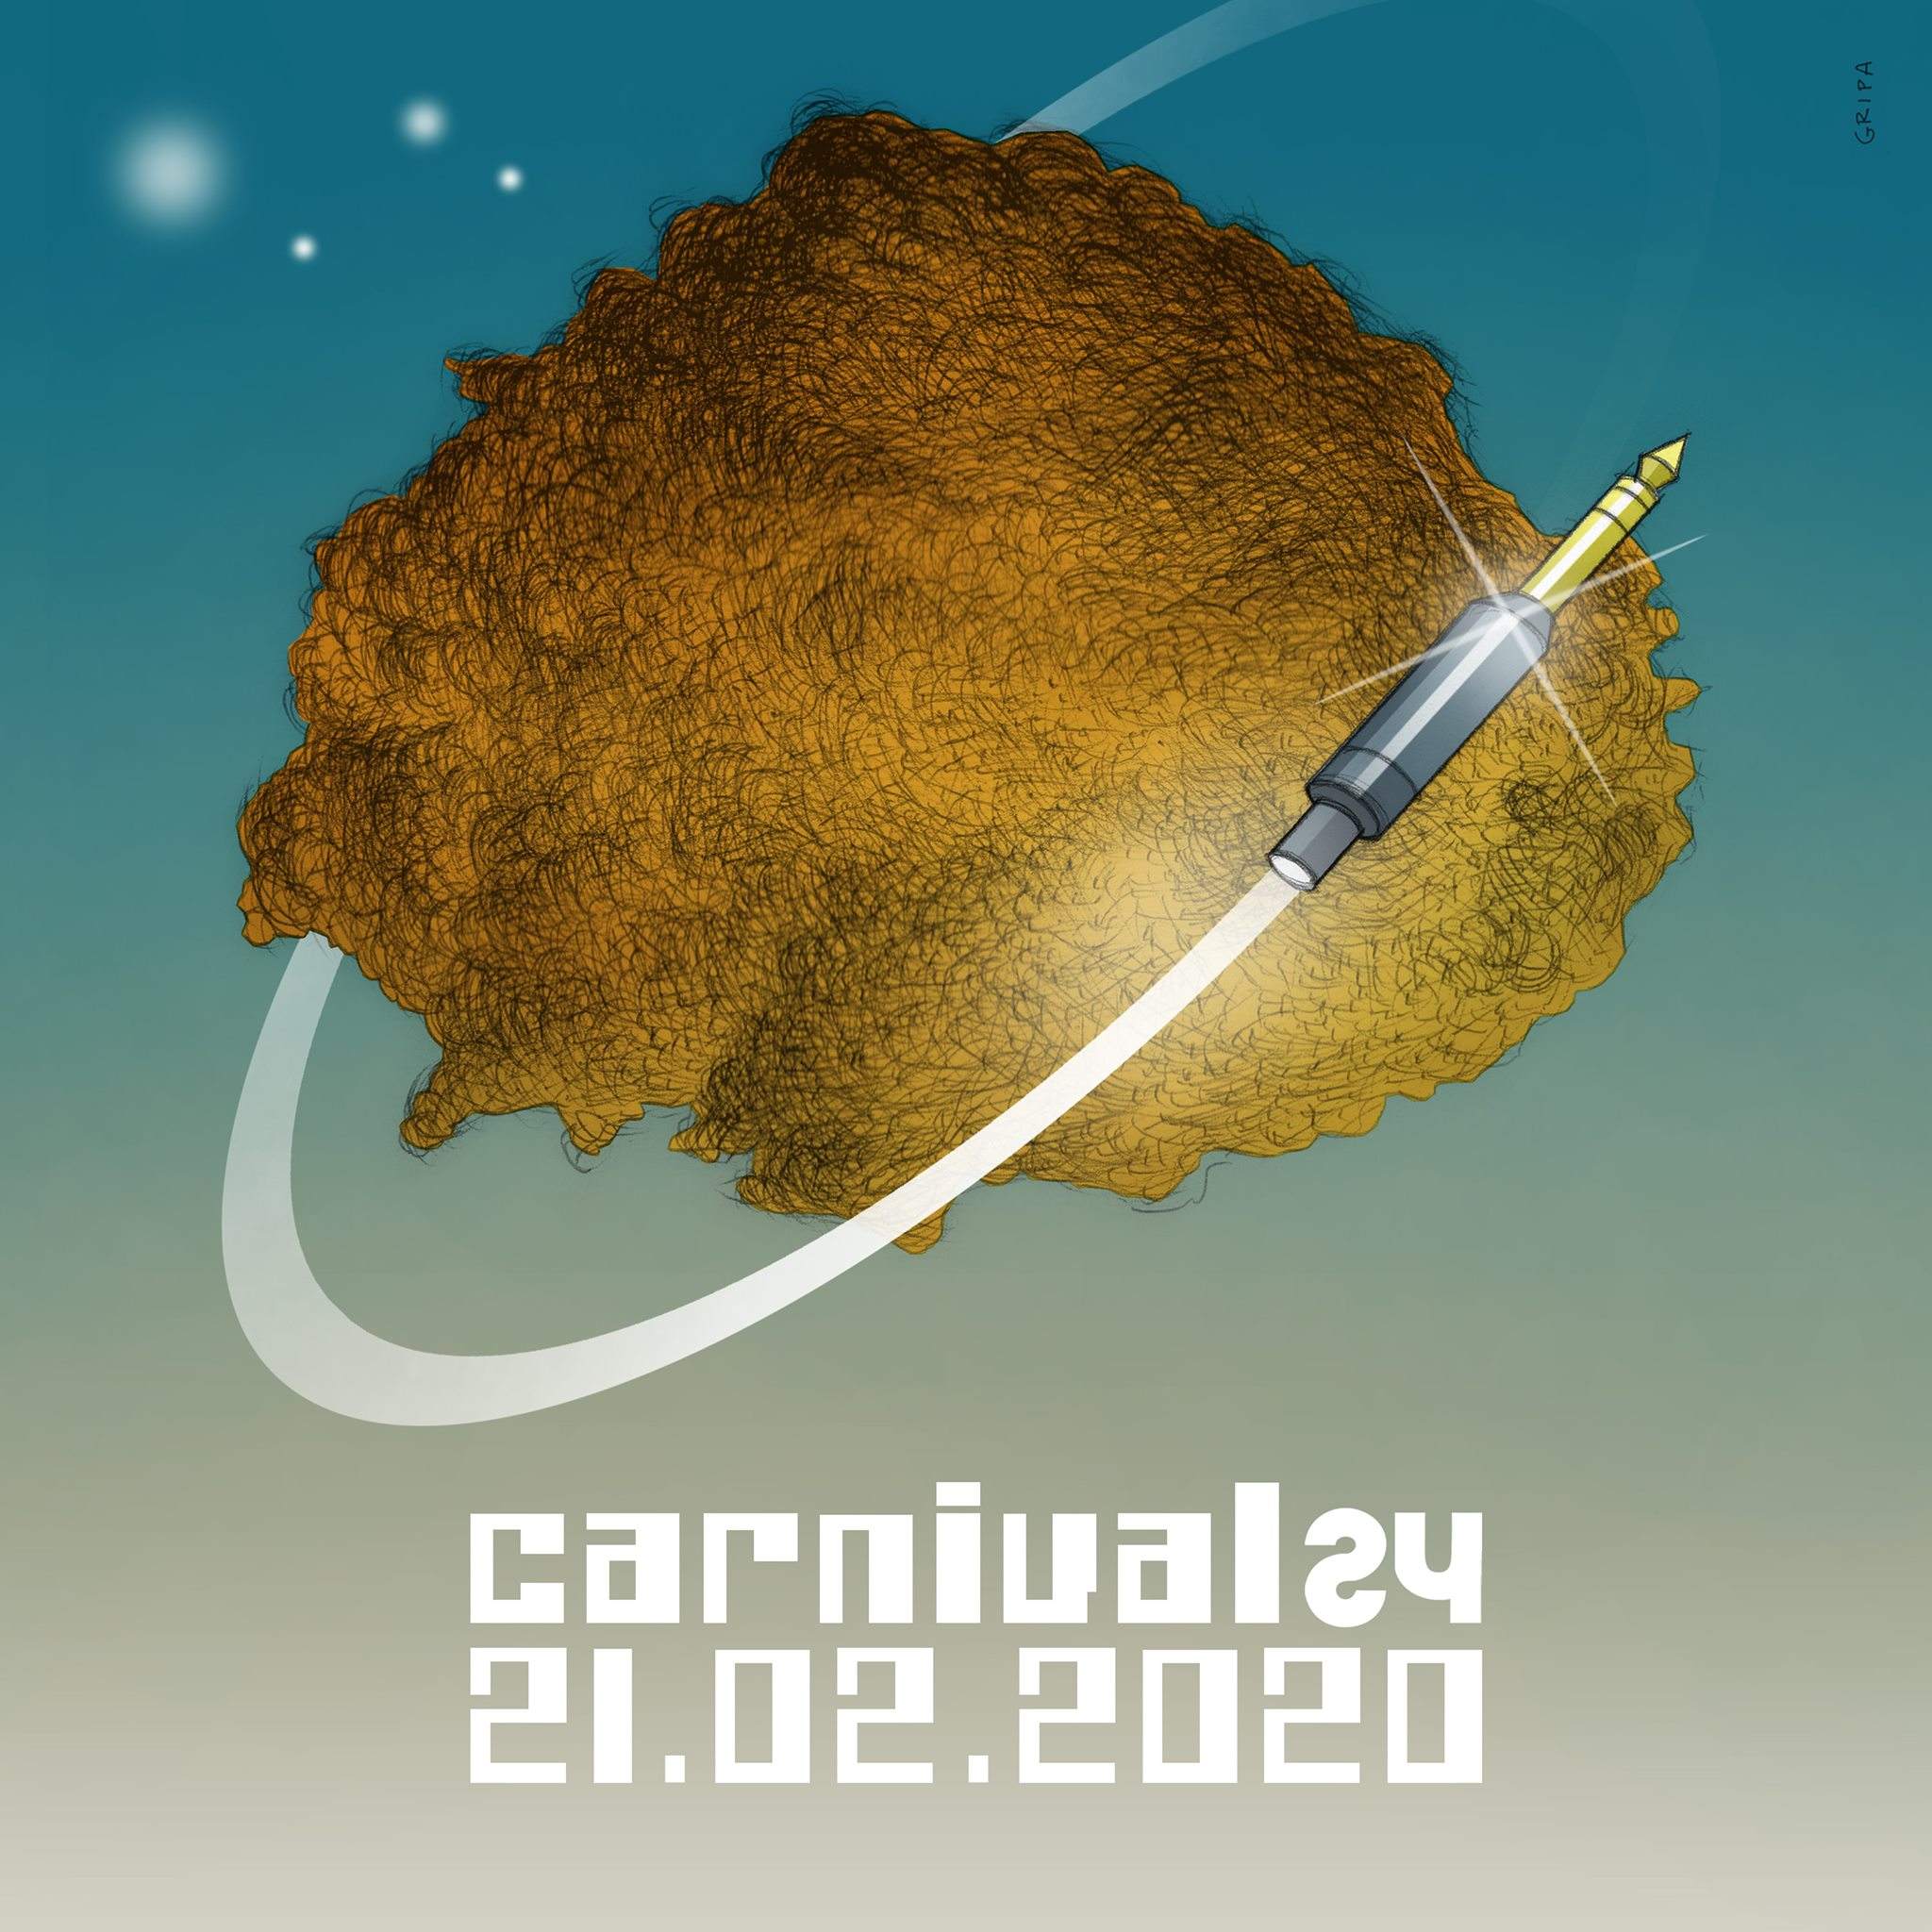 Carnival 24 - Página frontal